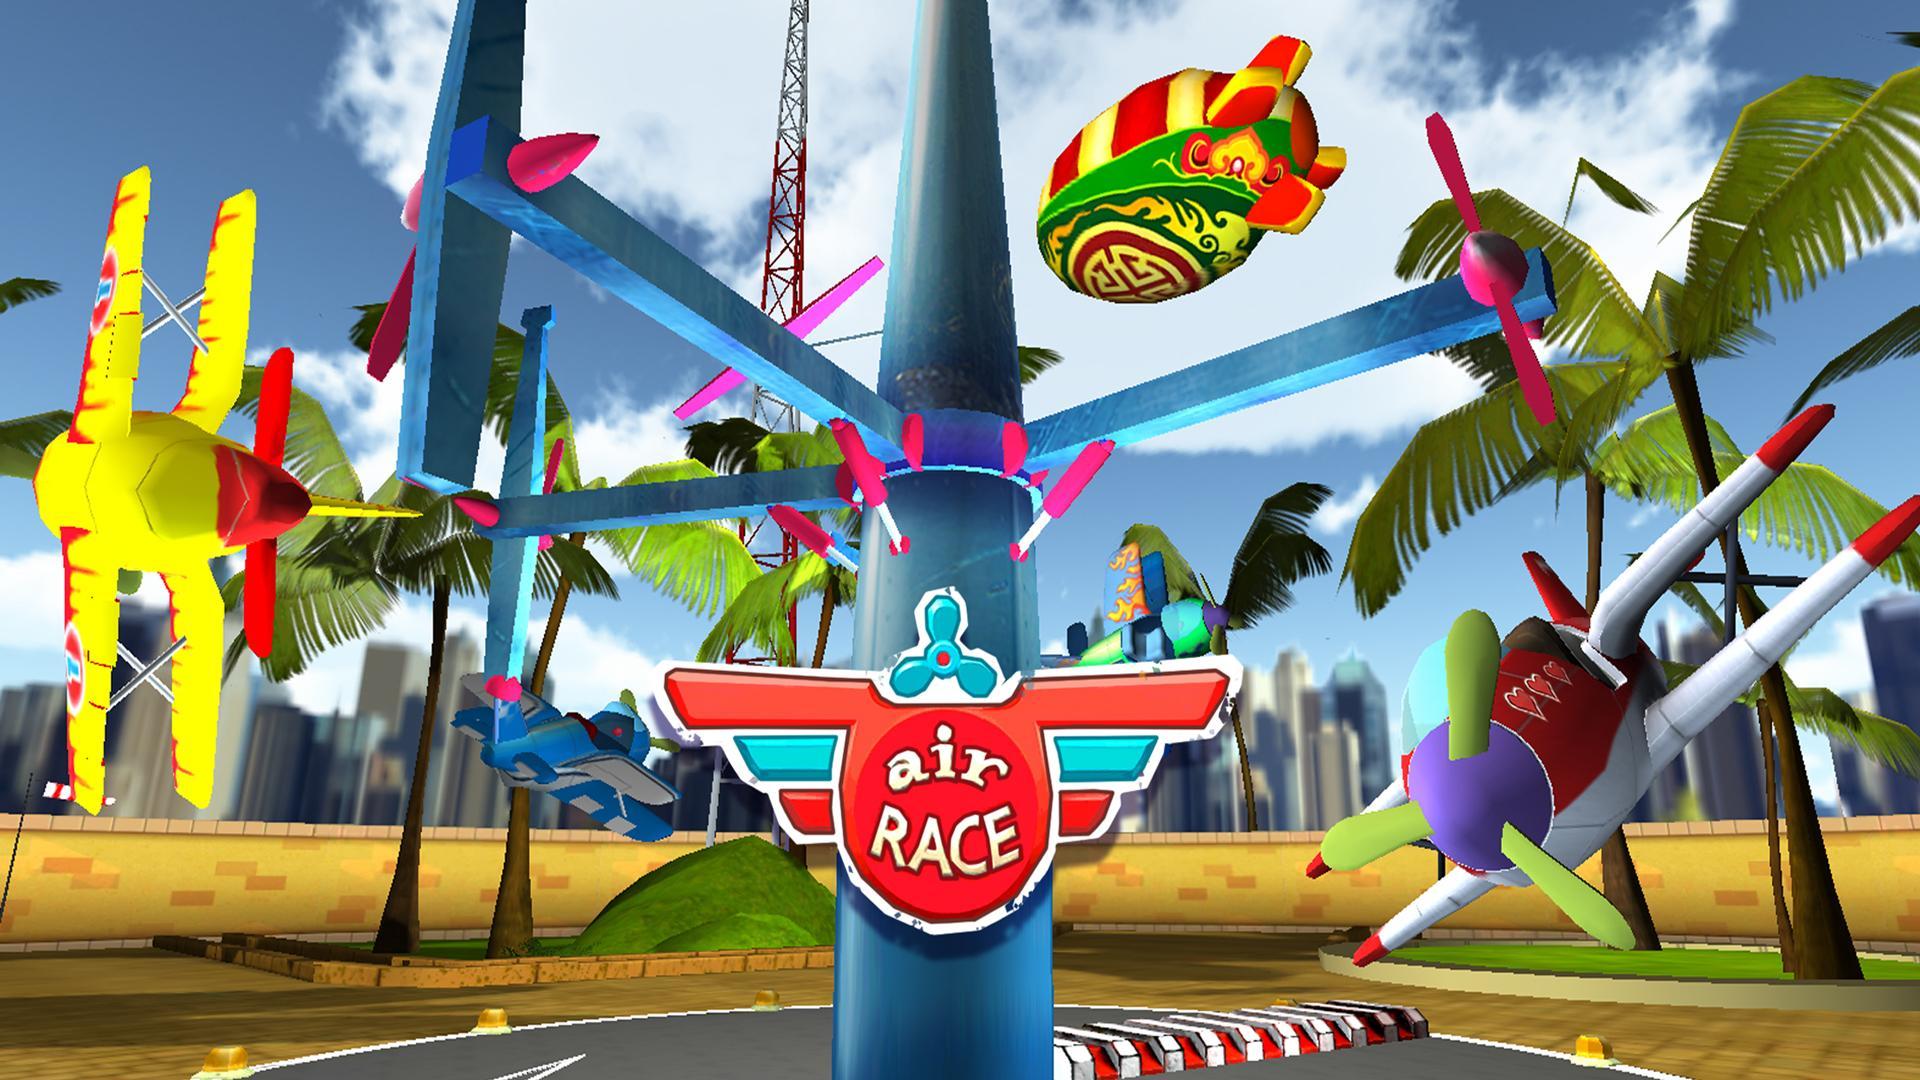 Air vr. Air Race игры. Air Race аттракцион. VR Air Race. Игра воздушные гонки для дыхания.